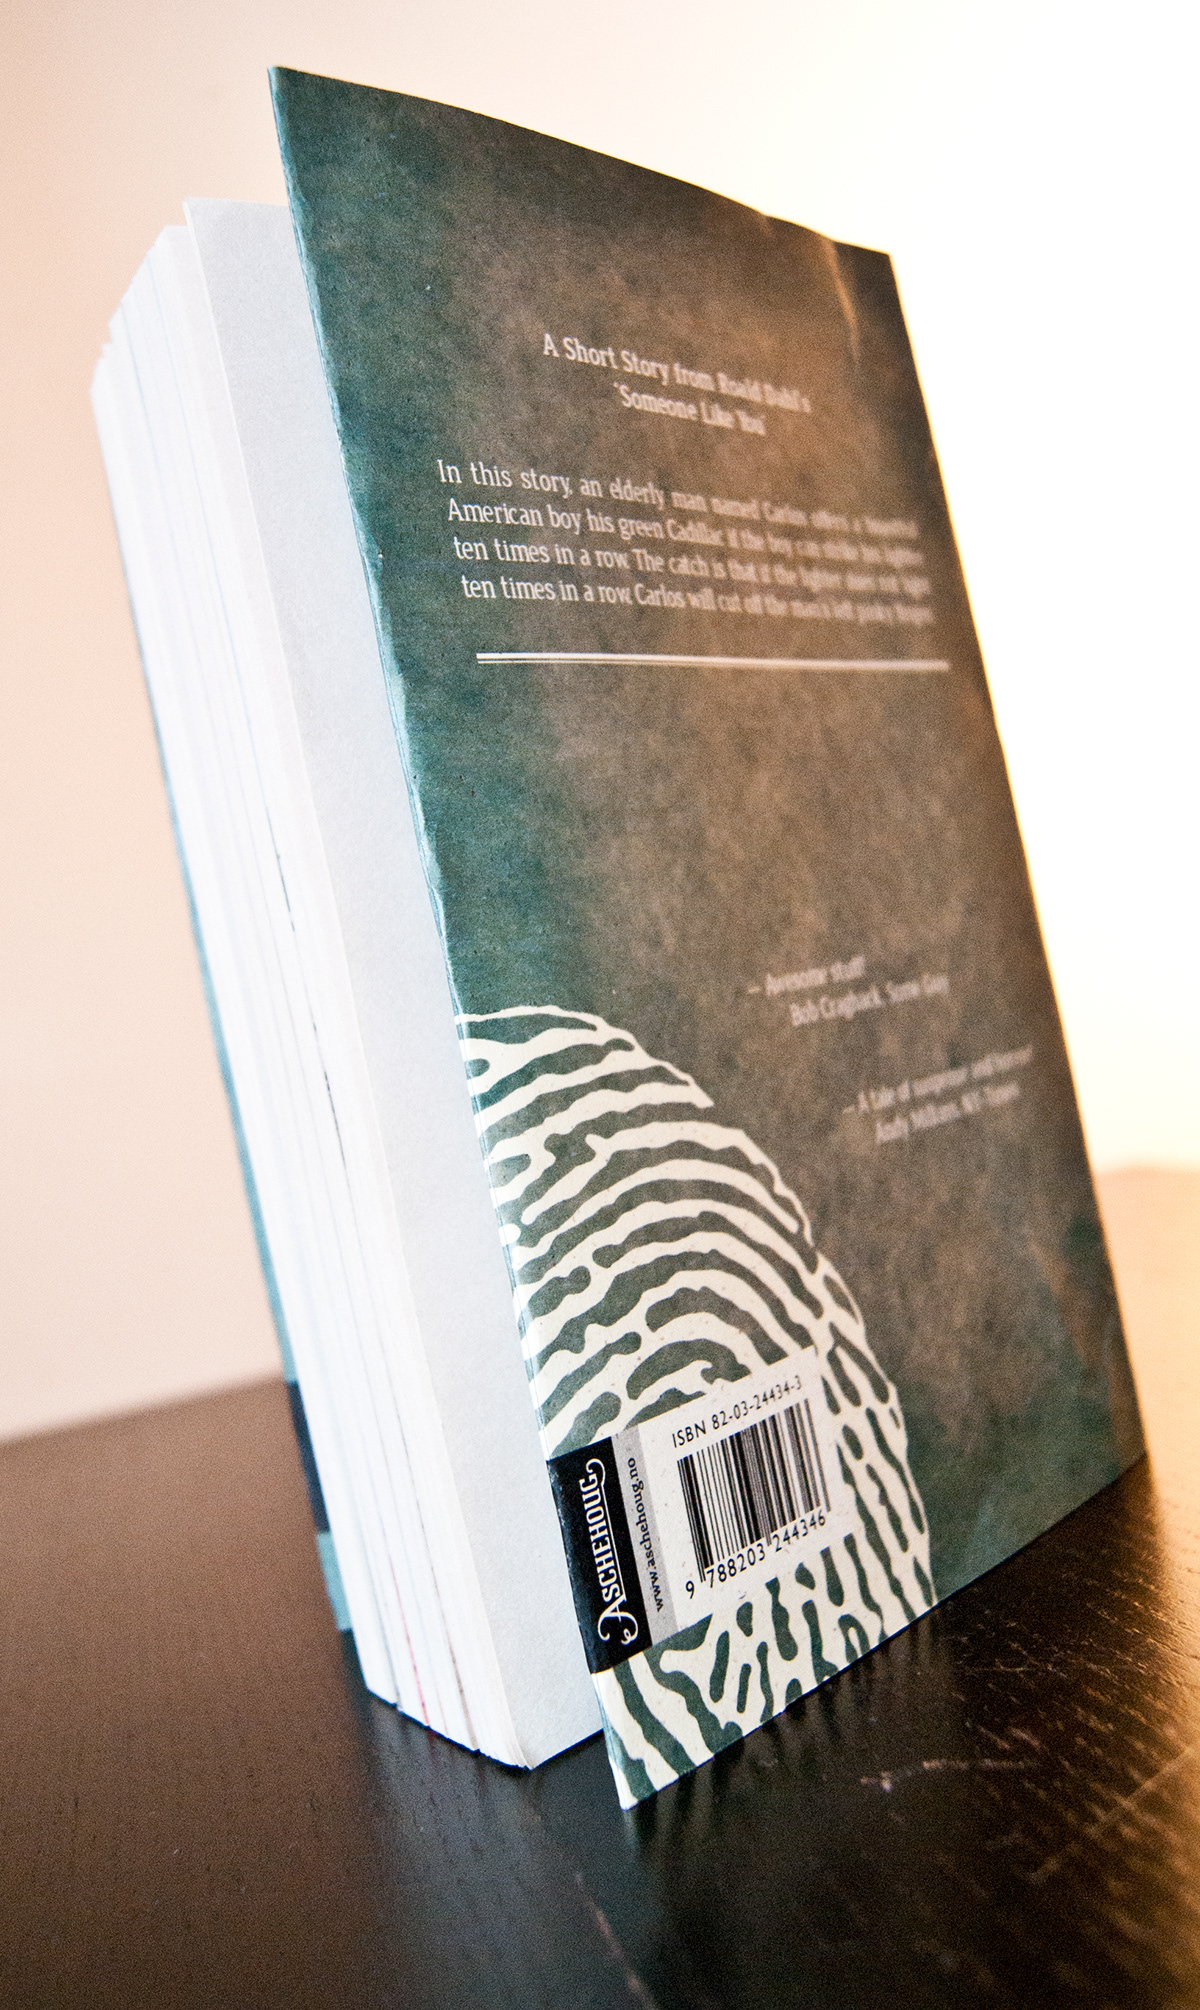 Roald Dahl book cover design fingerprints cover book